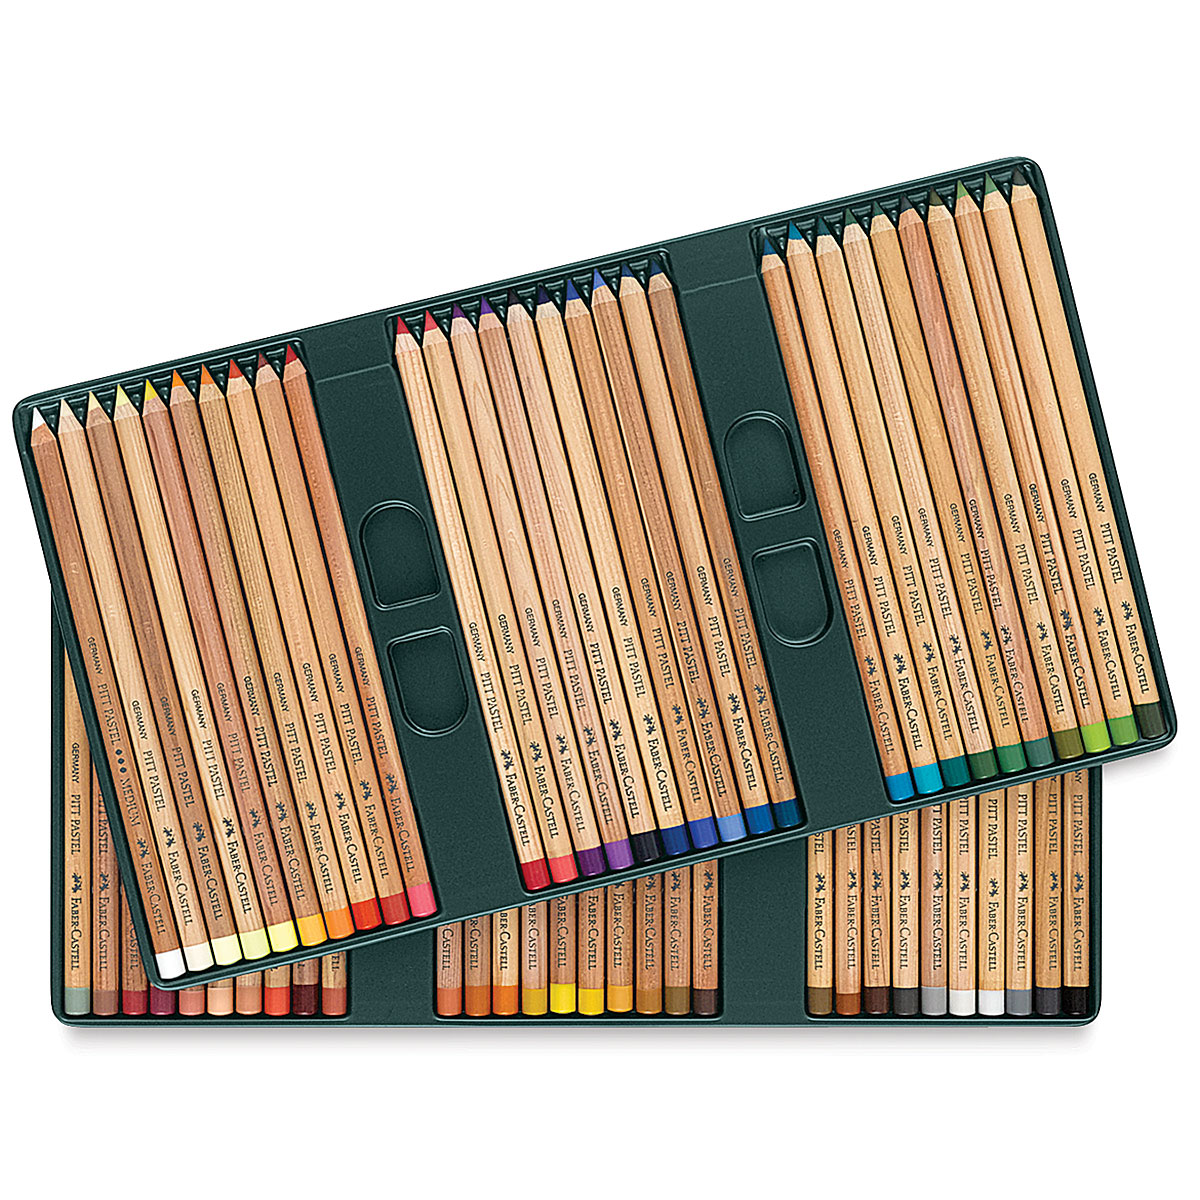 Basic techniques with Pitt Pastel Pencils